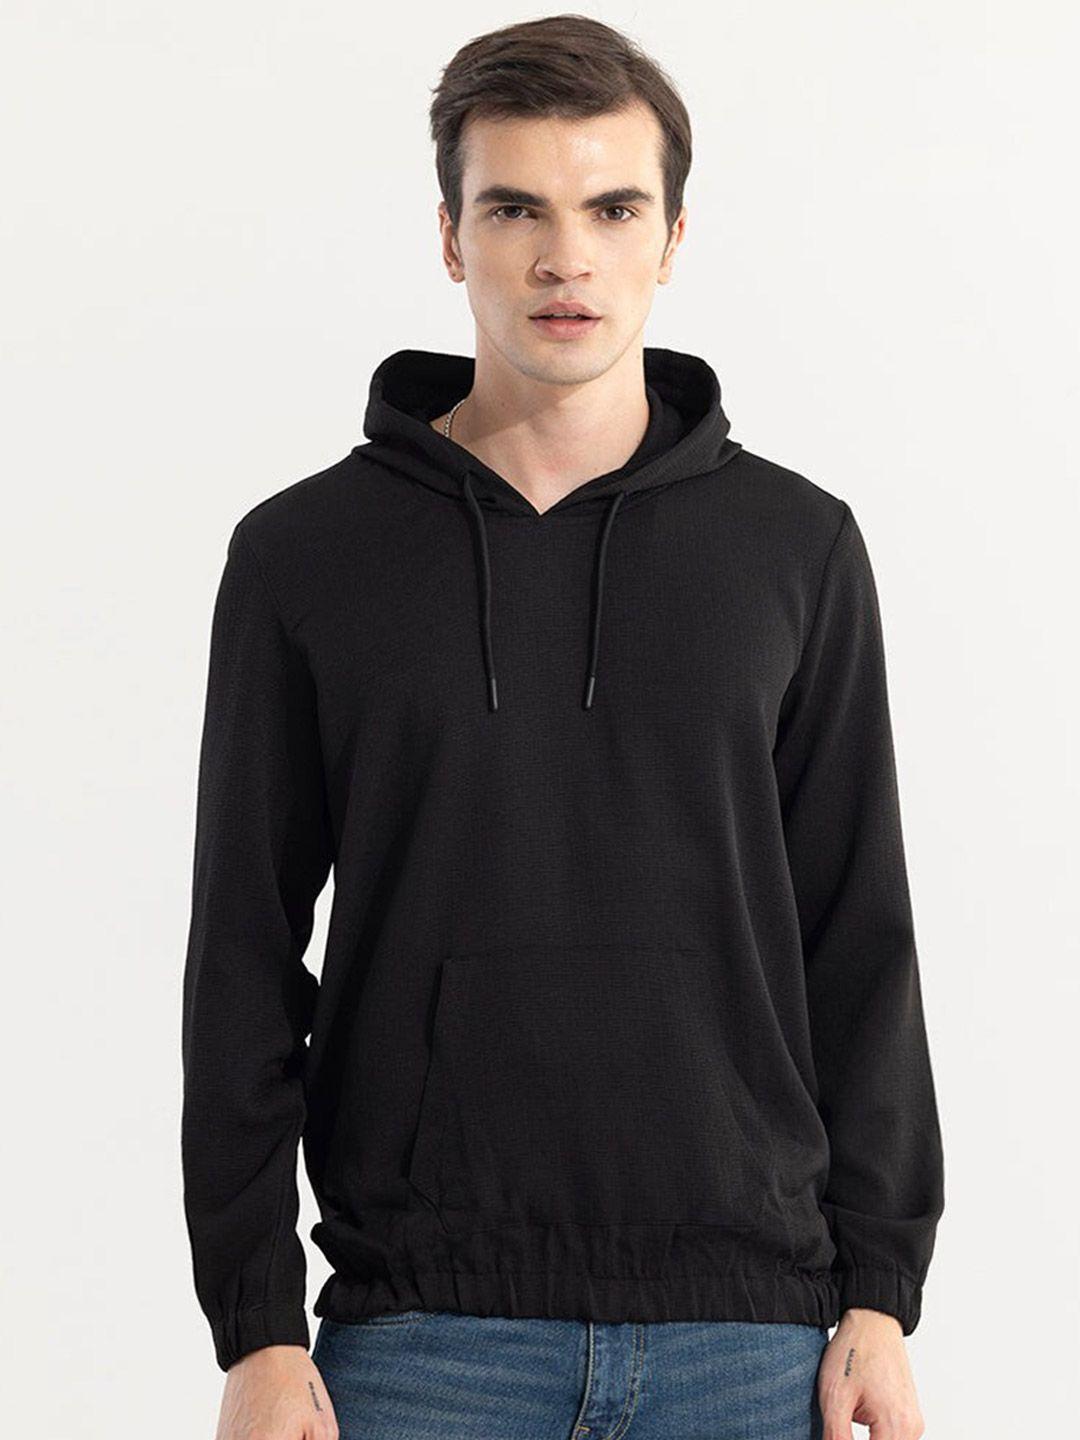 snitch black hooded pullover sweatshirt